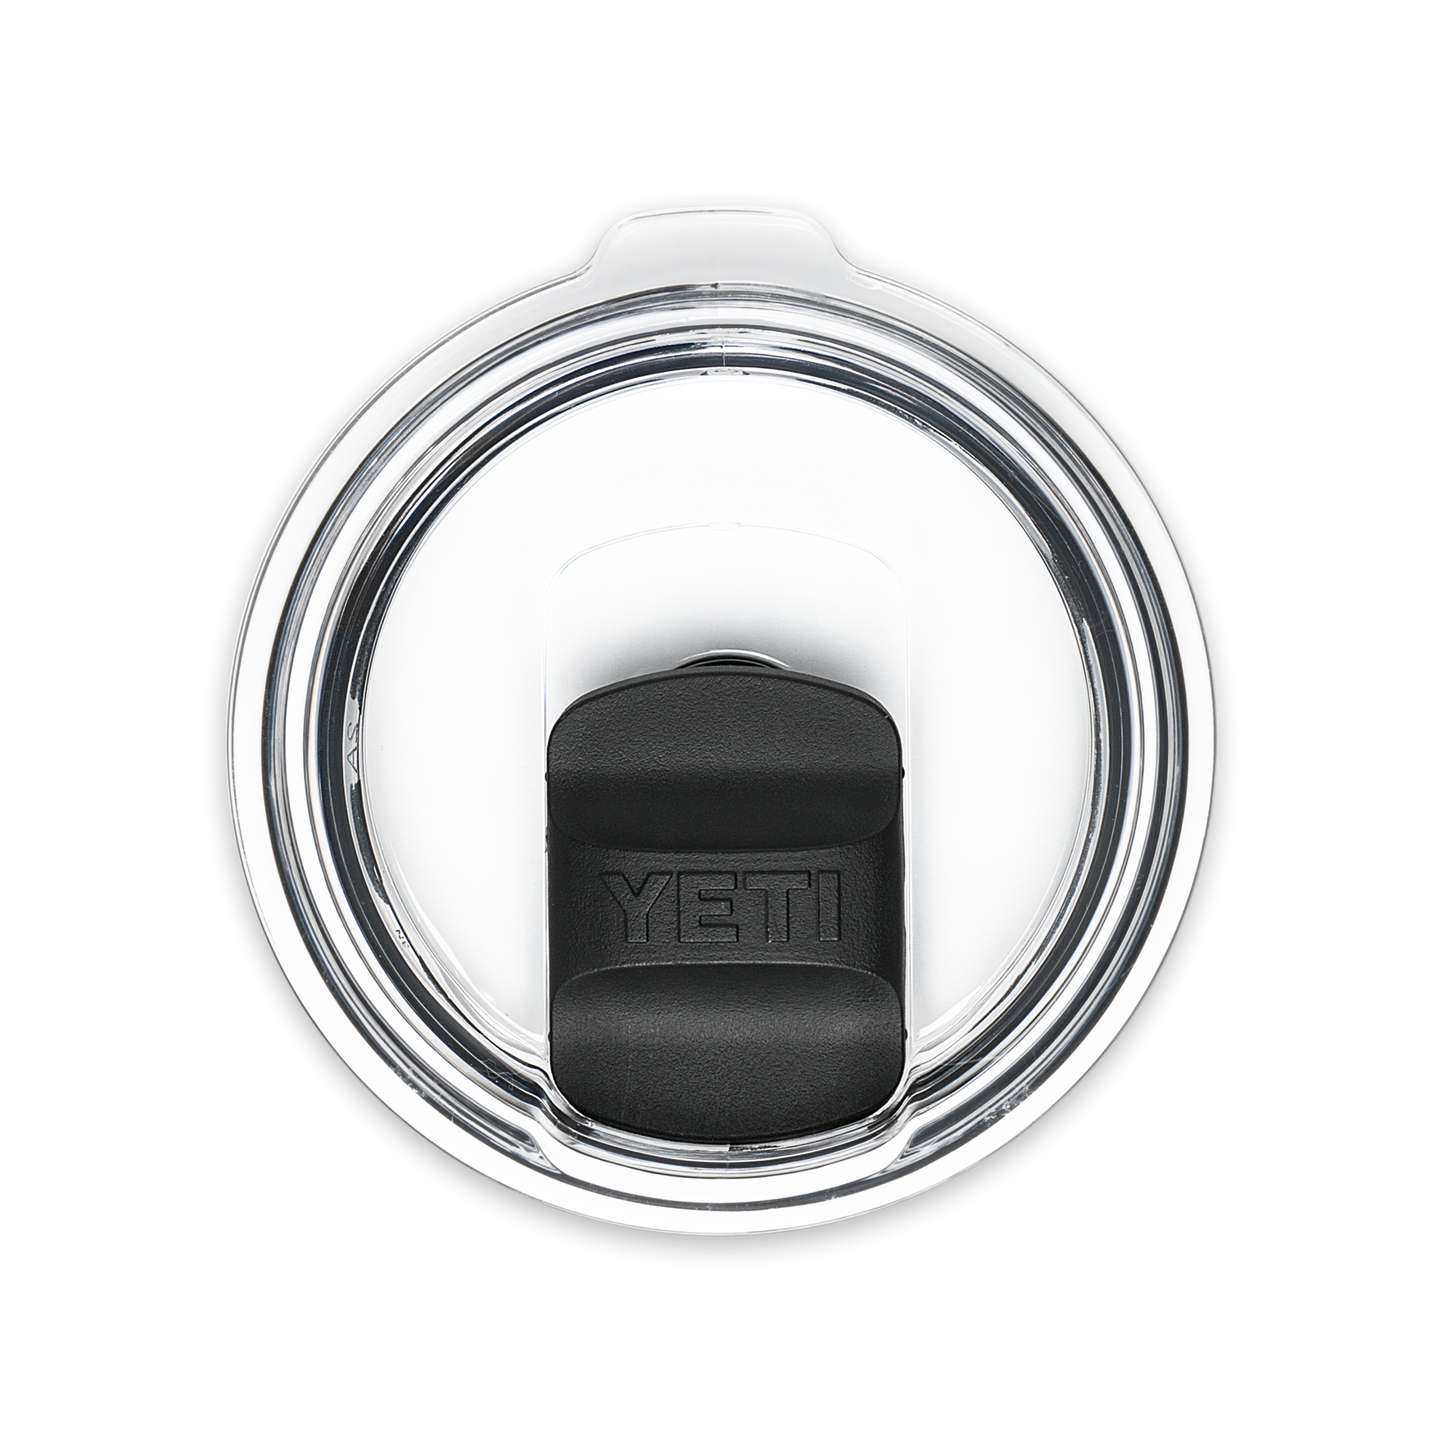 Custom Yeti Rambler 24 Oz Mug With Magslider Lid, White